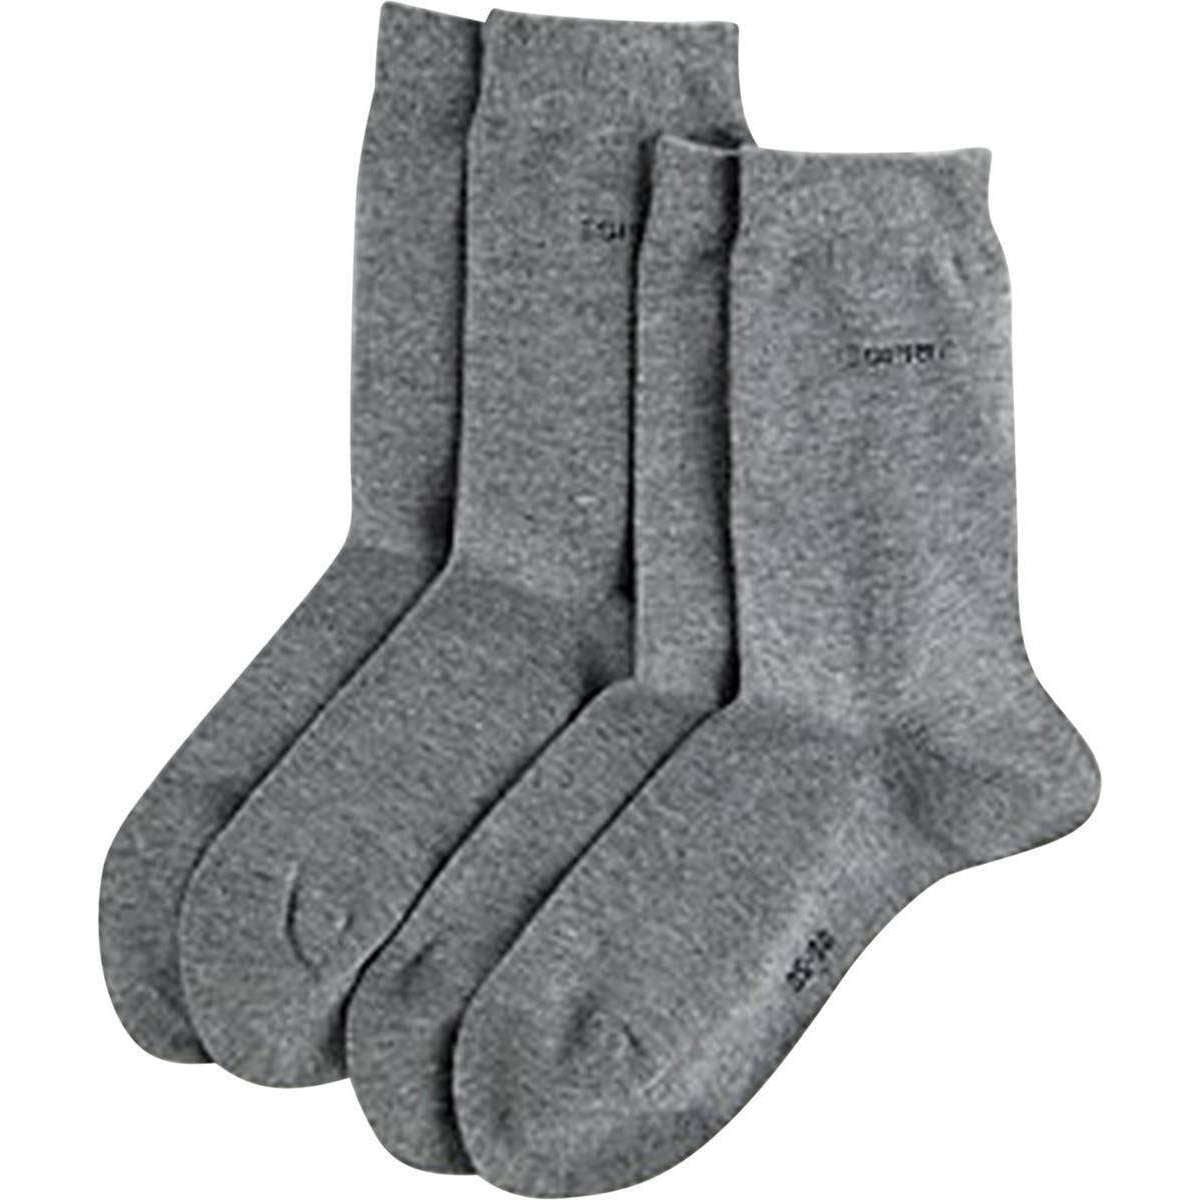 Esprit Basic Fine Knit Mid-Calf 2 Pack Socks - Light Grey